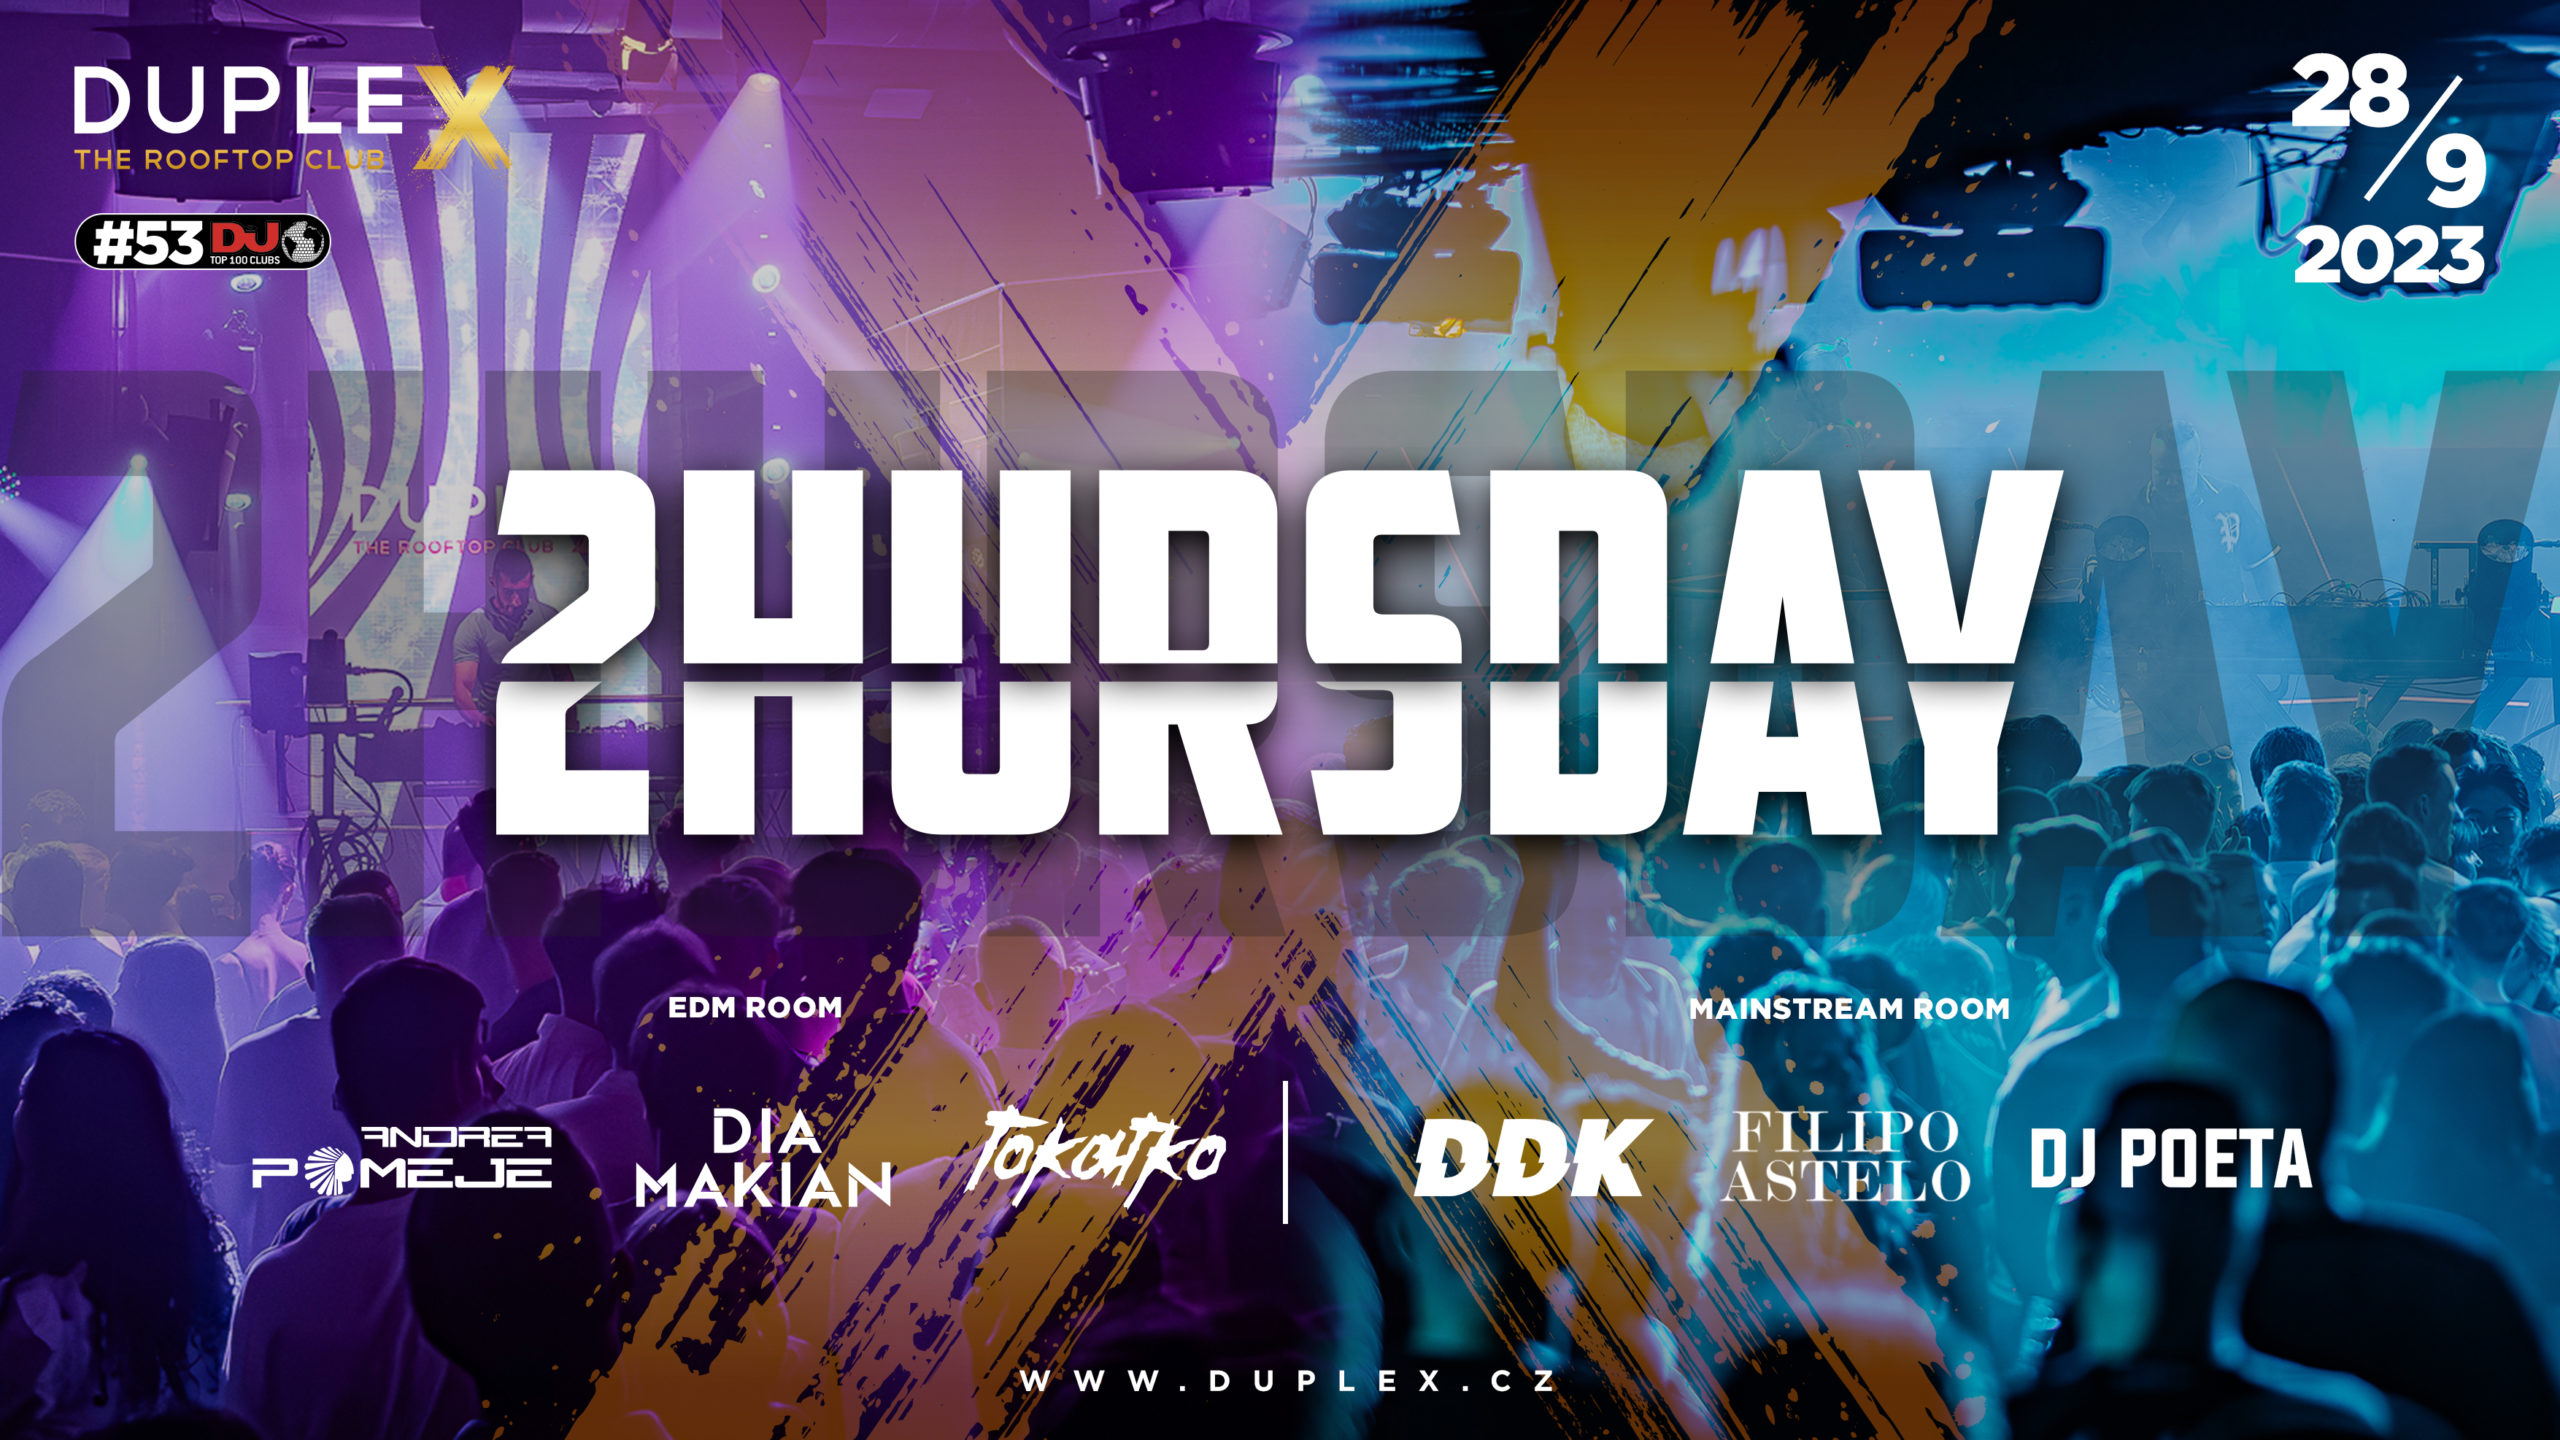 2HURSDAY - The Best Thursday Party at Duplex Prague